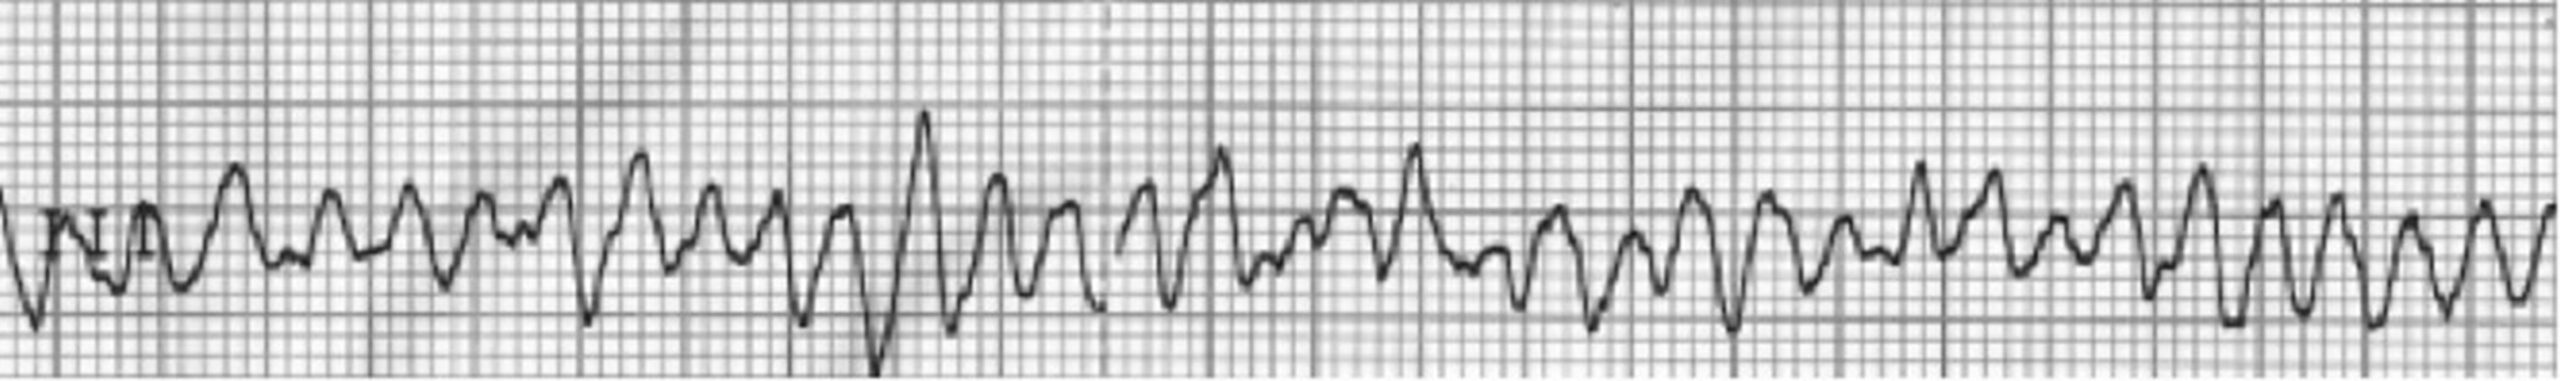 ECG showing ventricular fibrillation, the most dangerous heart rhythm abnormality